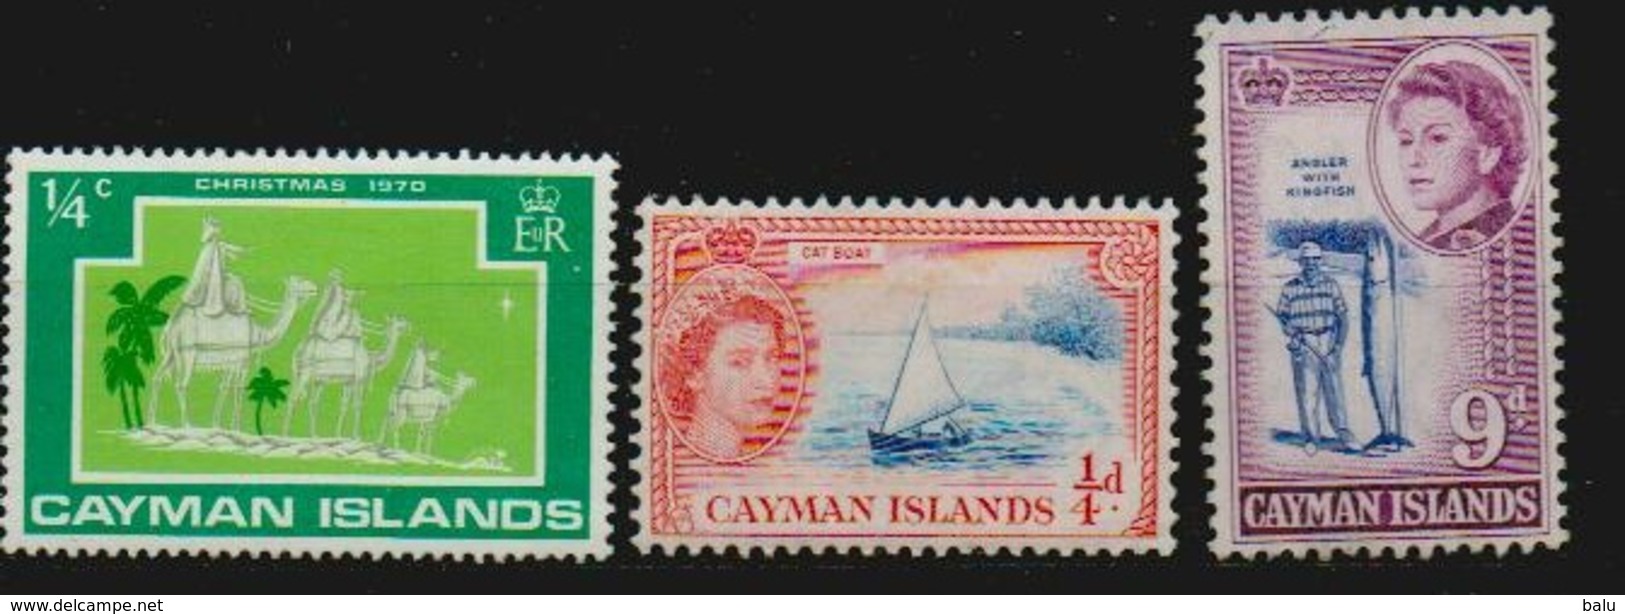 Cayman Islands, 3 Marken, Siehe Scan ** MNH, Christmas 1970, Cat Boat, Die Rechte Marke * Angler With Kingfish - Kaimaninseln